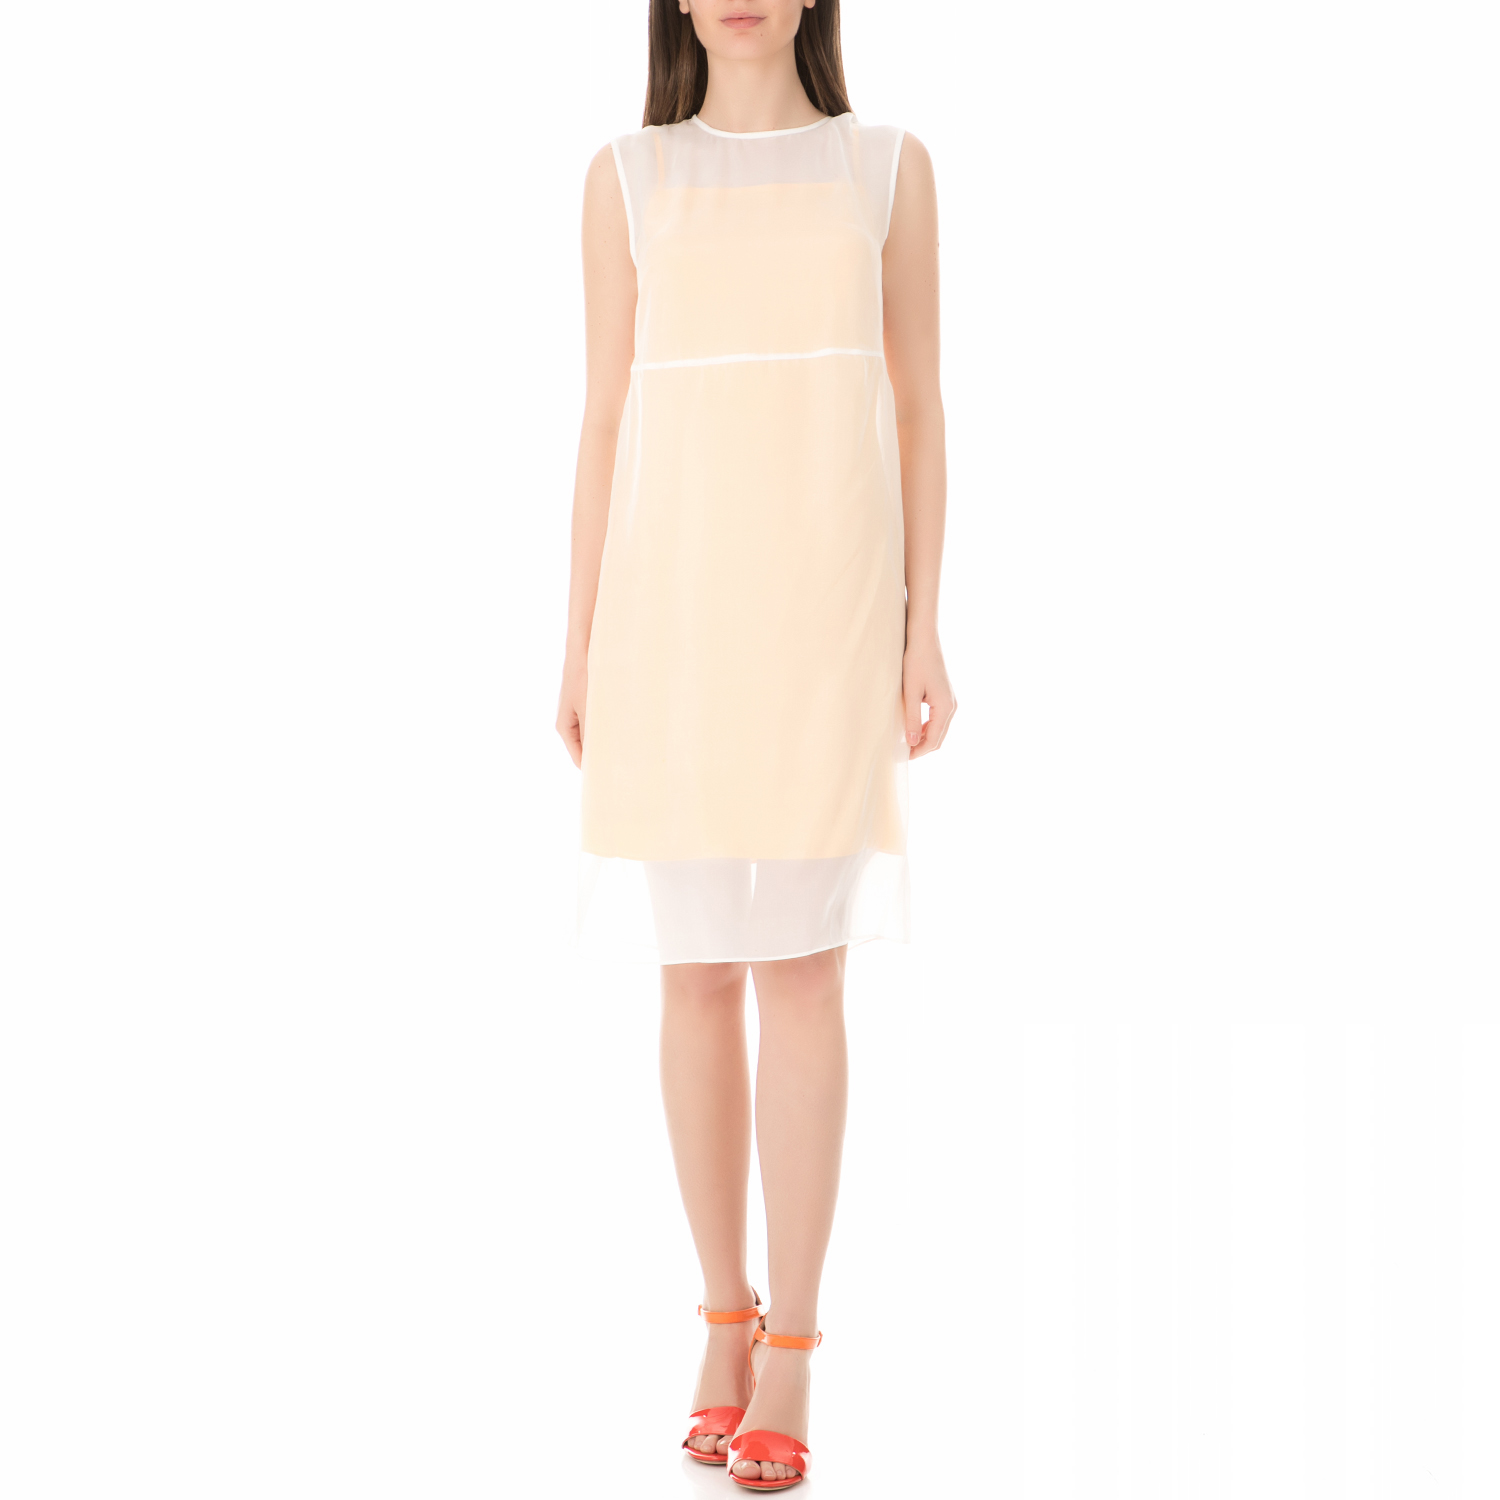 CALVIN KLEIN JEANS - Γυναικείο φόρεμα CALVIN KLEIN JEANS DIVINA λευκό κίτρινο Γυναικεία/Ρούχα/Φορέματα/Μίνι